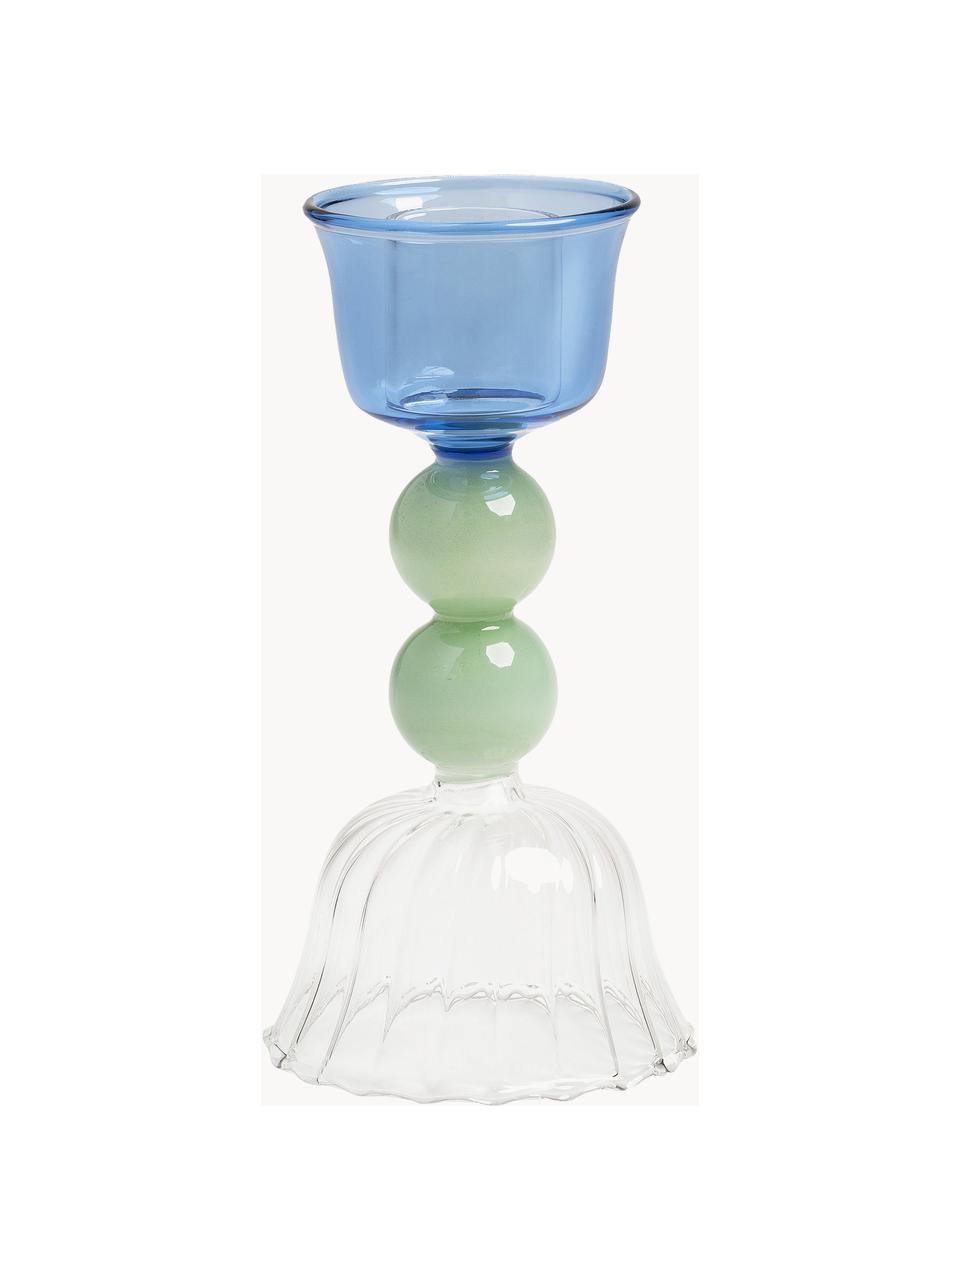 Kandelaar Perle van borosilicaatglas, Borosilicaatglas, Transparant, blauw, saliegroen, Ø 6 x H 12 cm